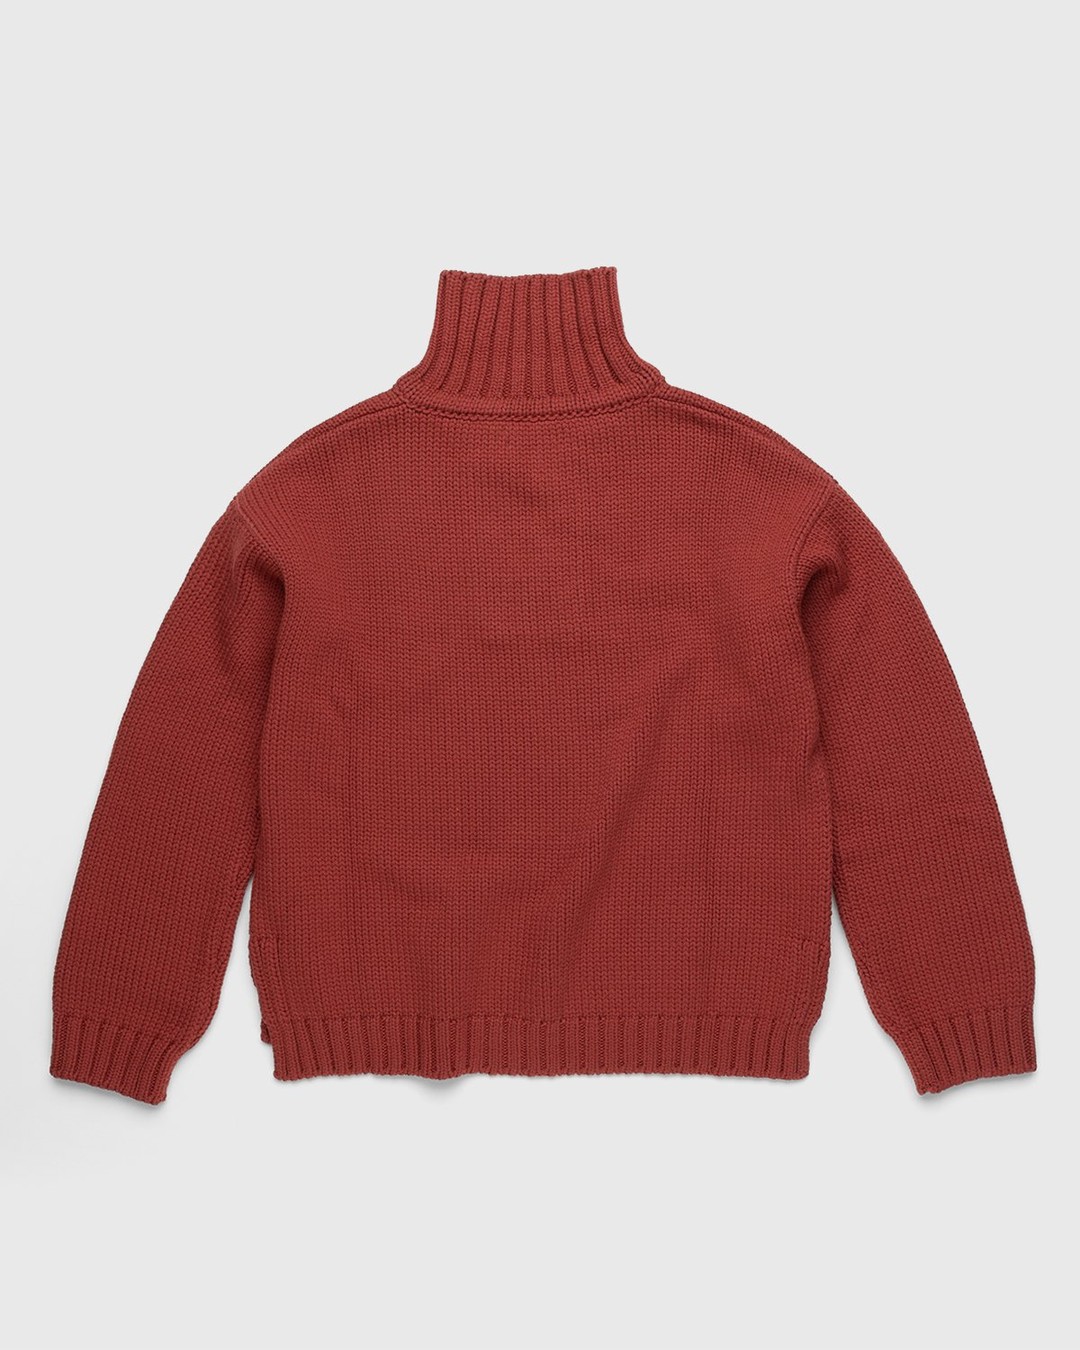 Phipps – Vareuse Sweater Rust - Shawlnecks - Red - Image 2